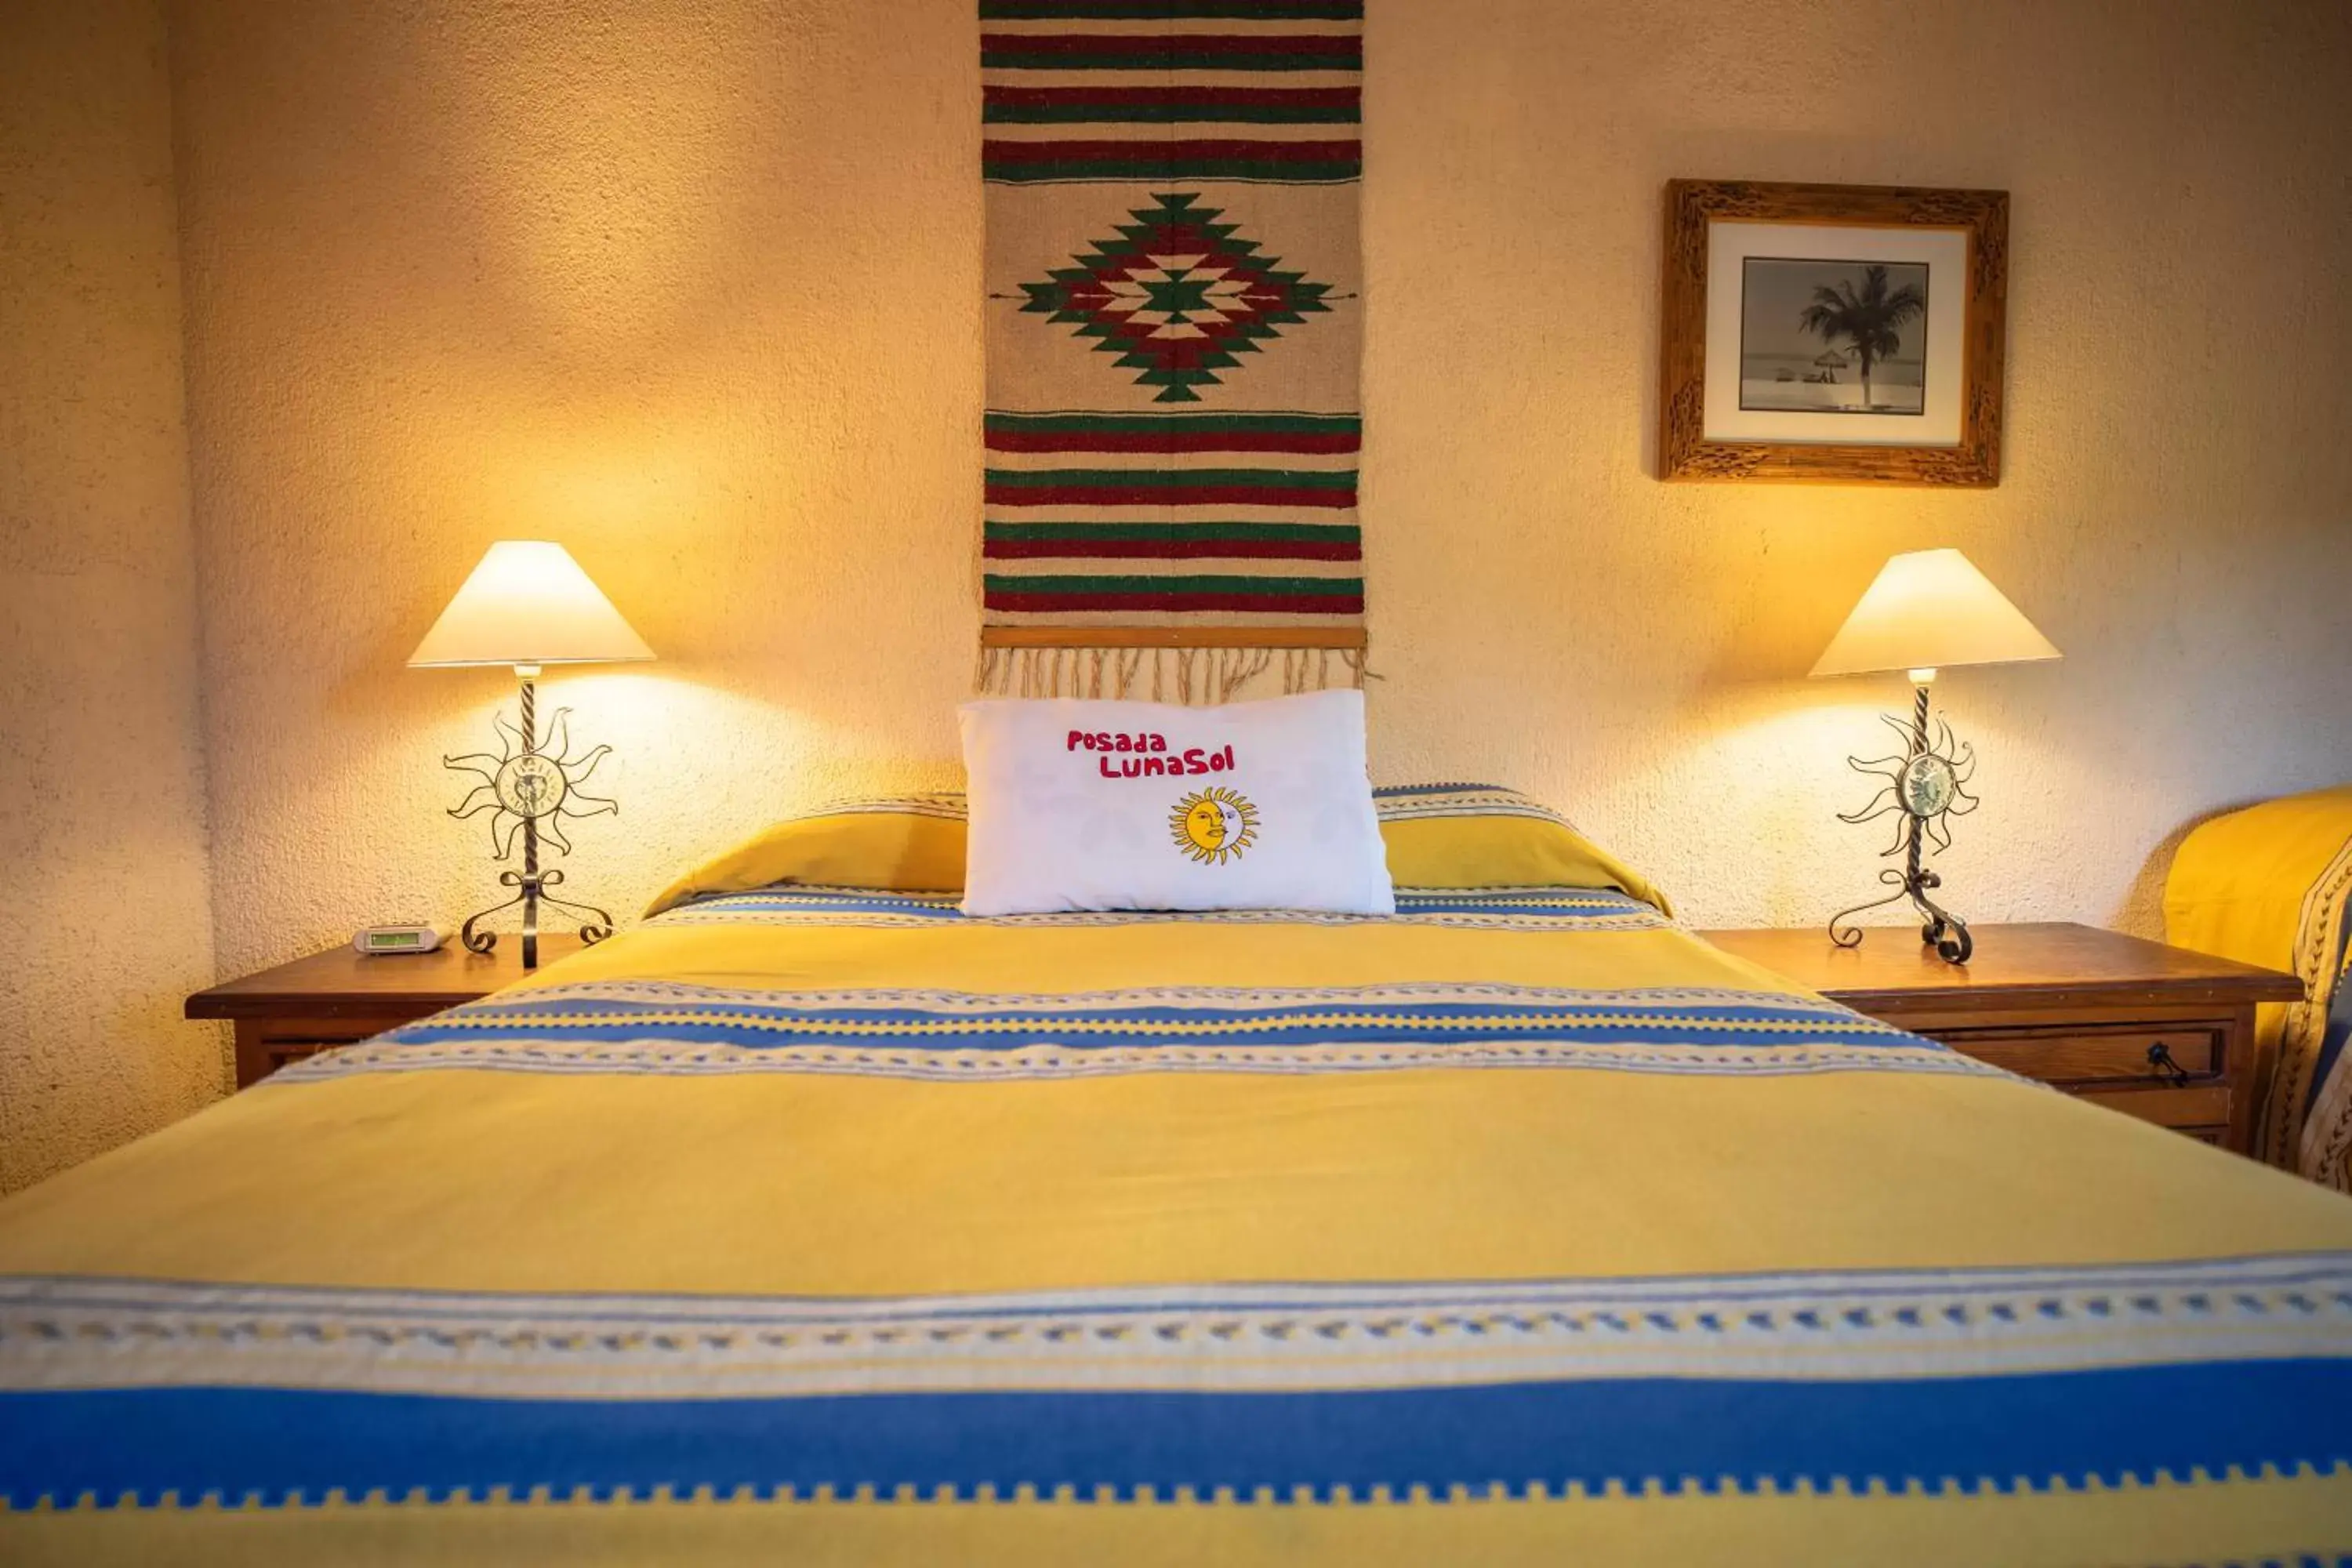 Bed in Hotel Posada Luna Sol